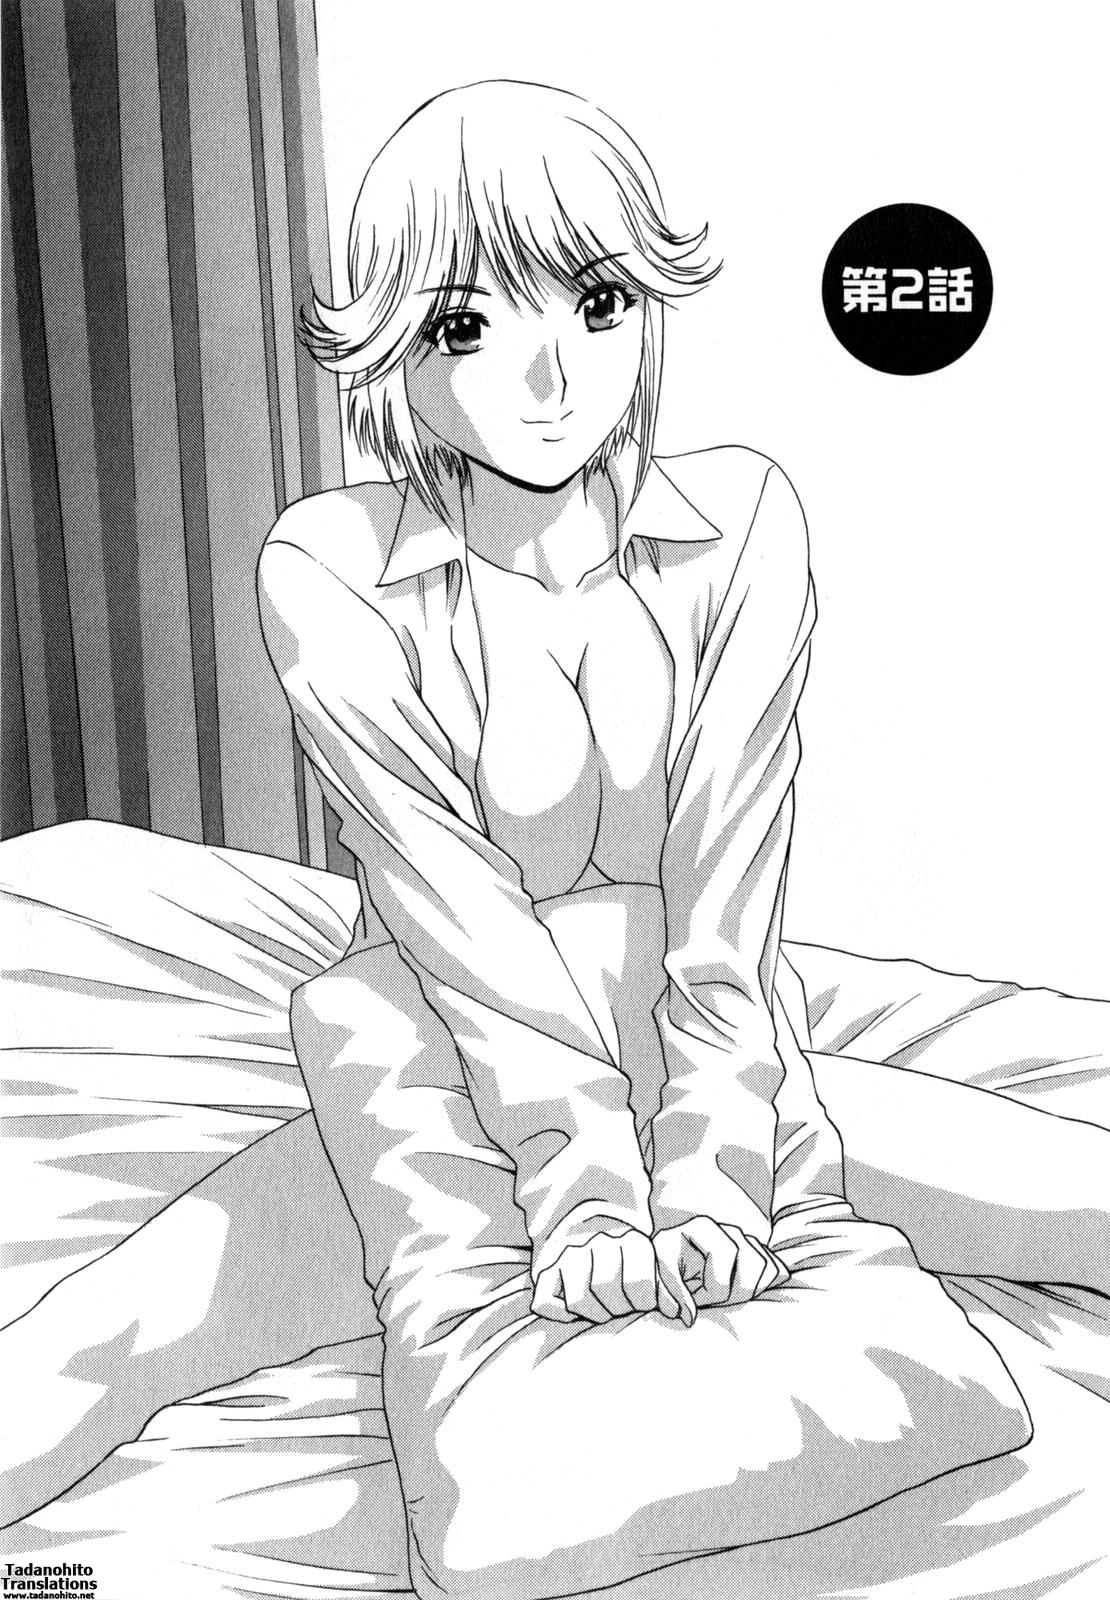 [Hidemaru] Life with Married Women Just Like a Manga 1 - Ch. 1-2 [English] {Tadanohito} 26